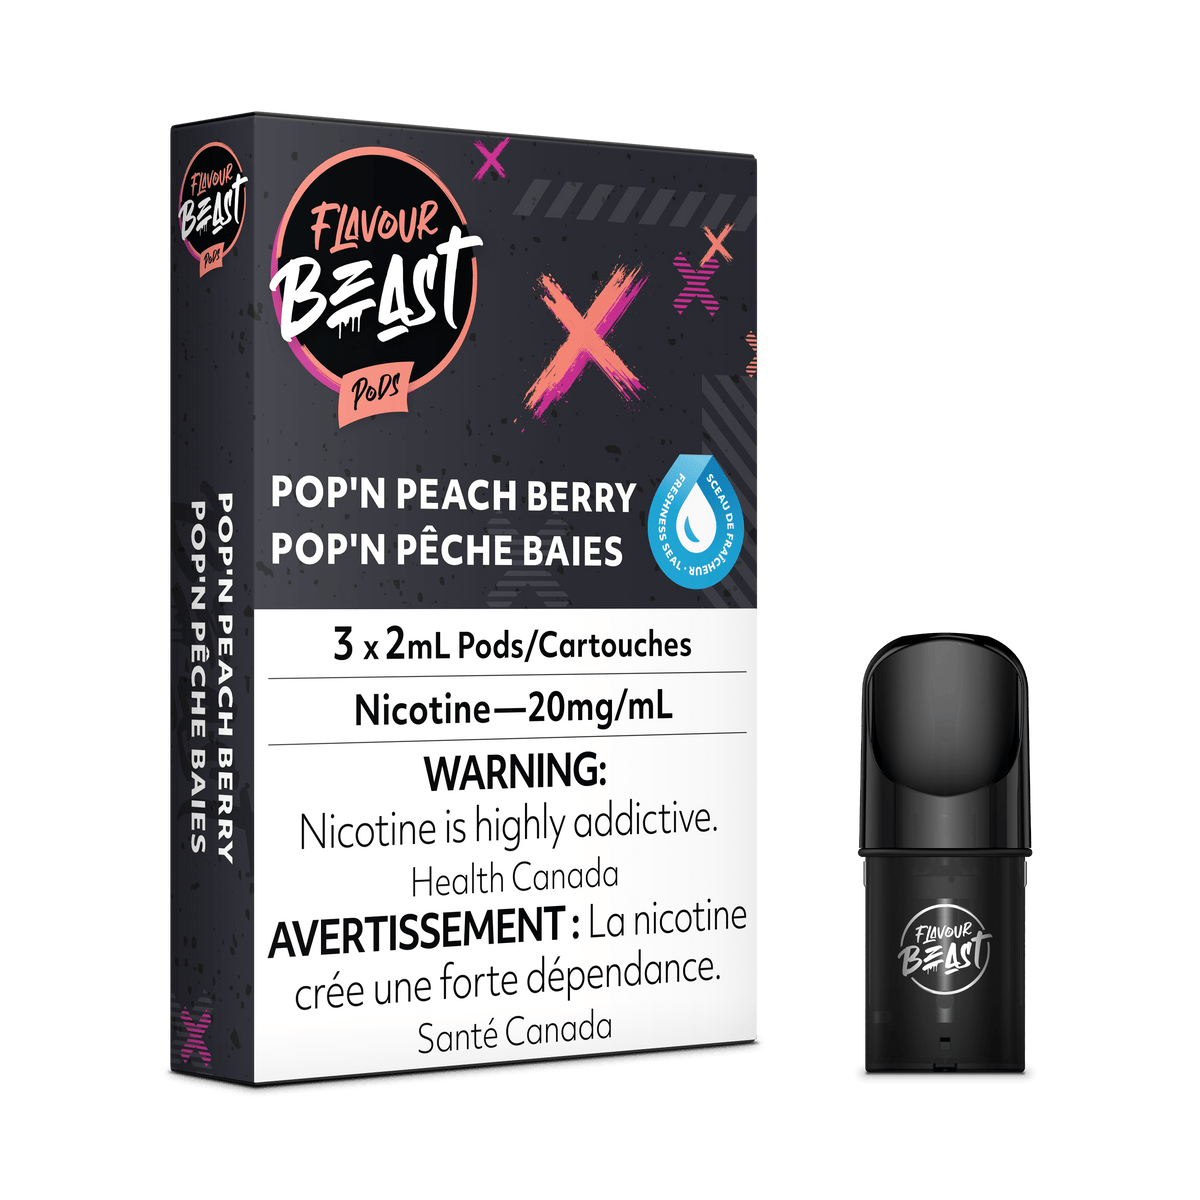 Flavour Beast Vape Pod - Packin' Peach Berry (Pop'n Peach Berry) available on Canada online vape shop